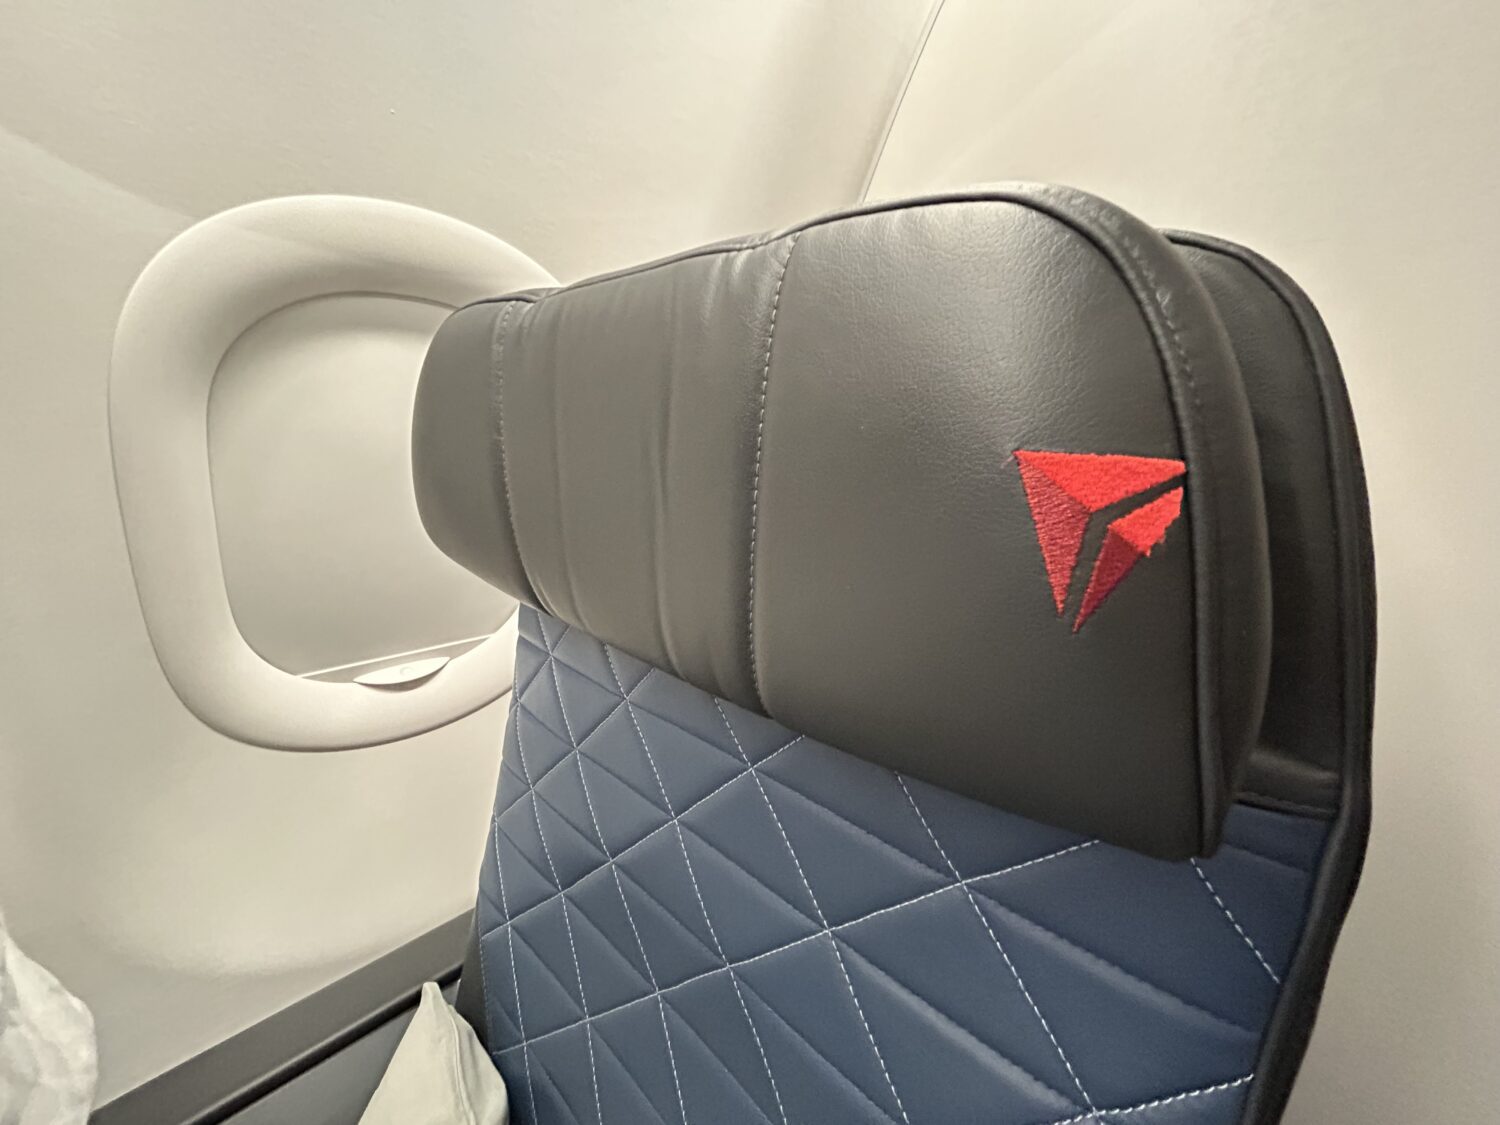 Delta Premium Select headrest and seat